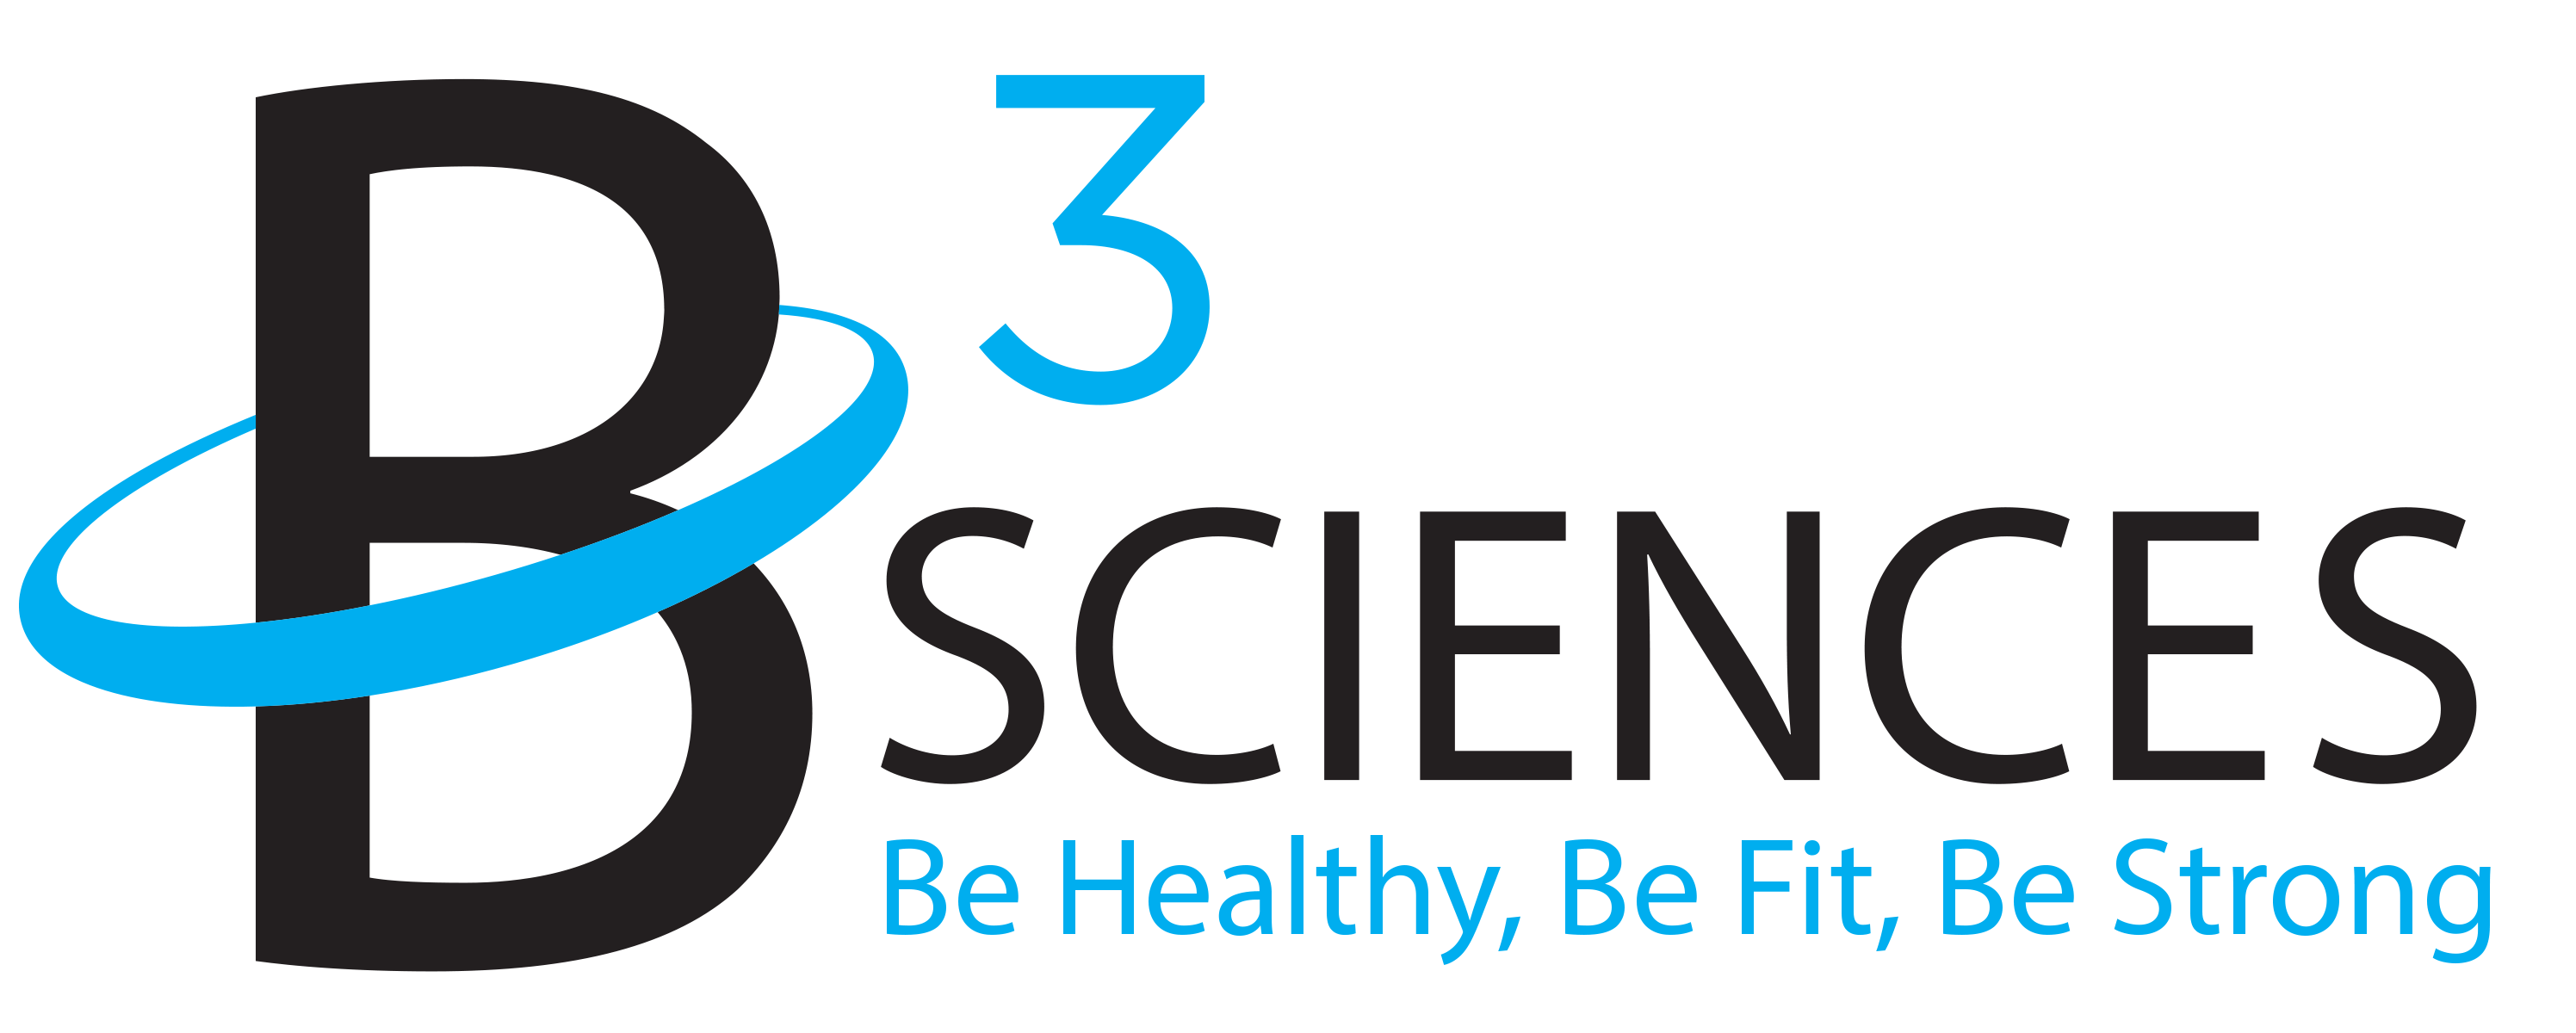 b3-sciences-logo